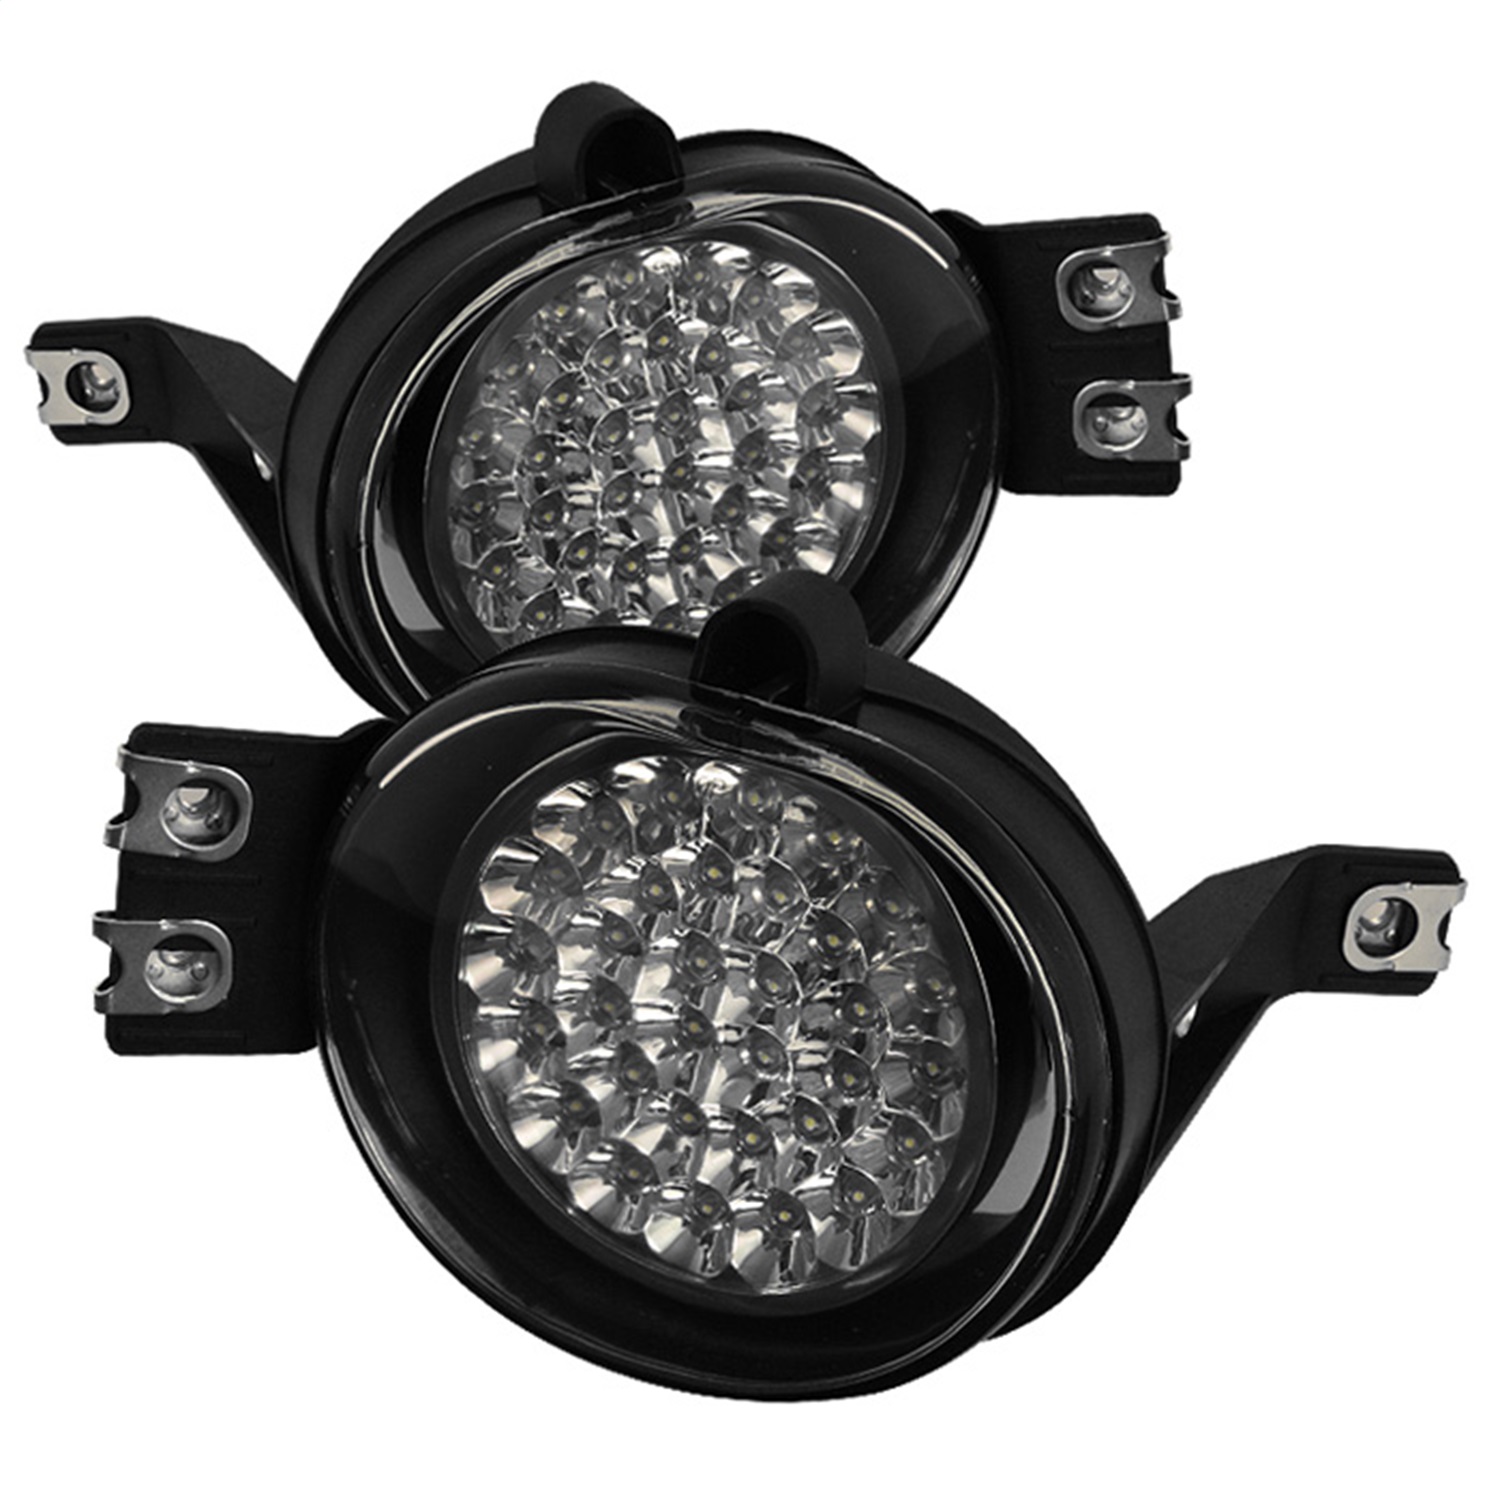 Spyder Auto 5015600 LED Fog Lights Fits 02-08 Durango Ram 1500 Ram 2500 Ram 3500